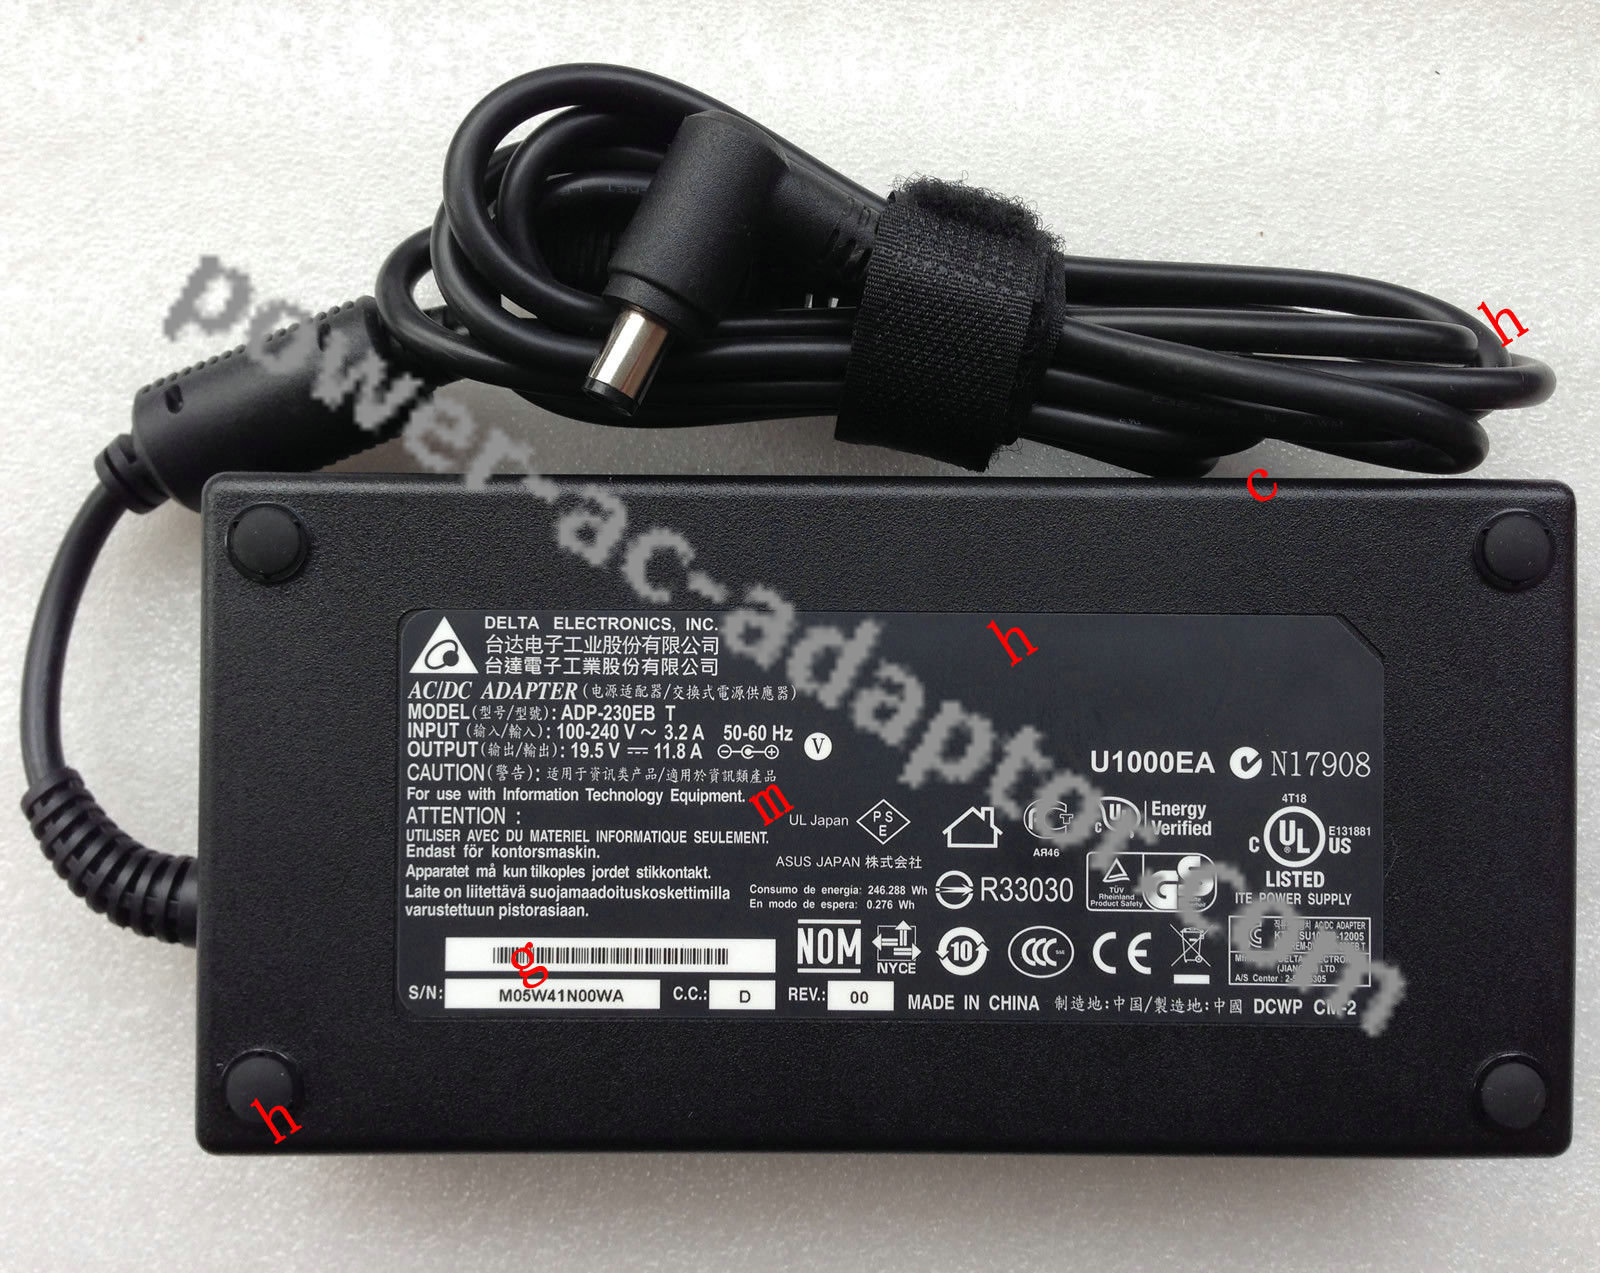 OEM Delta 230W 19.5V AC Adapter for ASUS ROG G750JH-QS71-CB